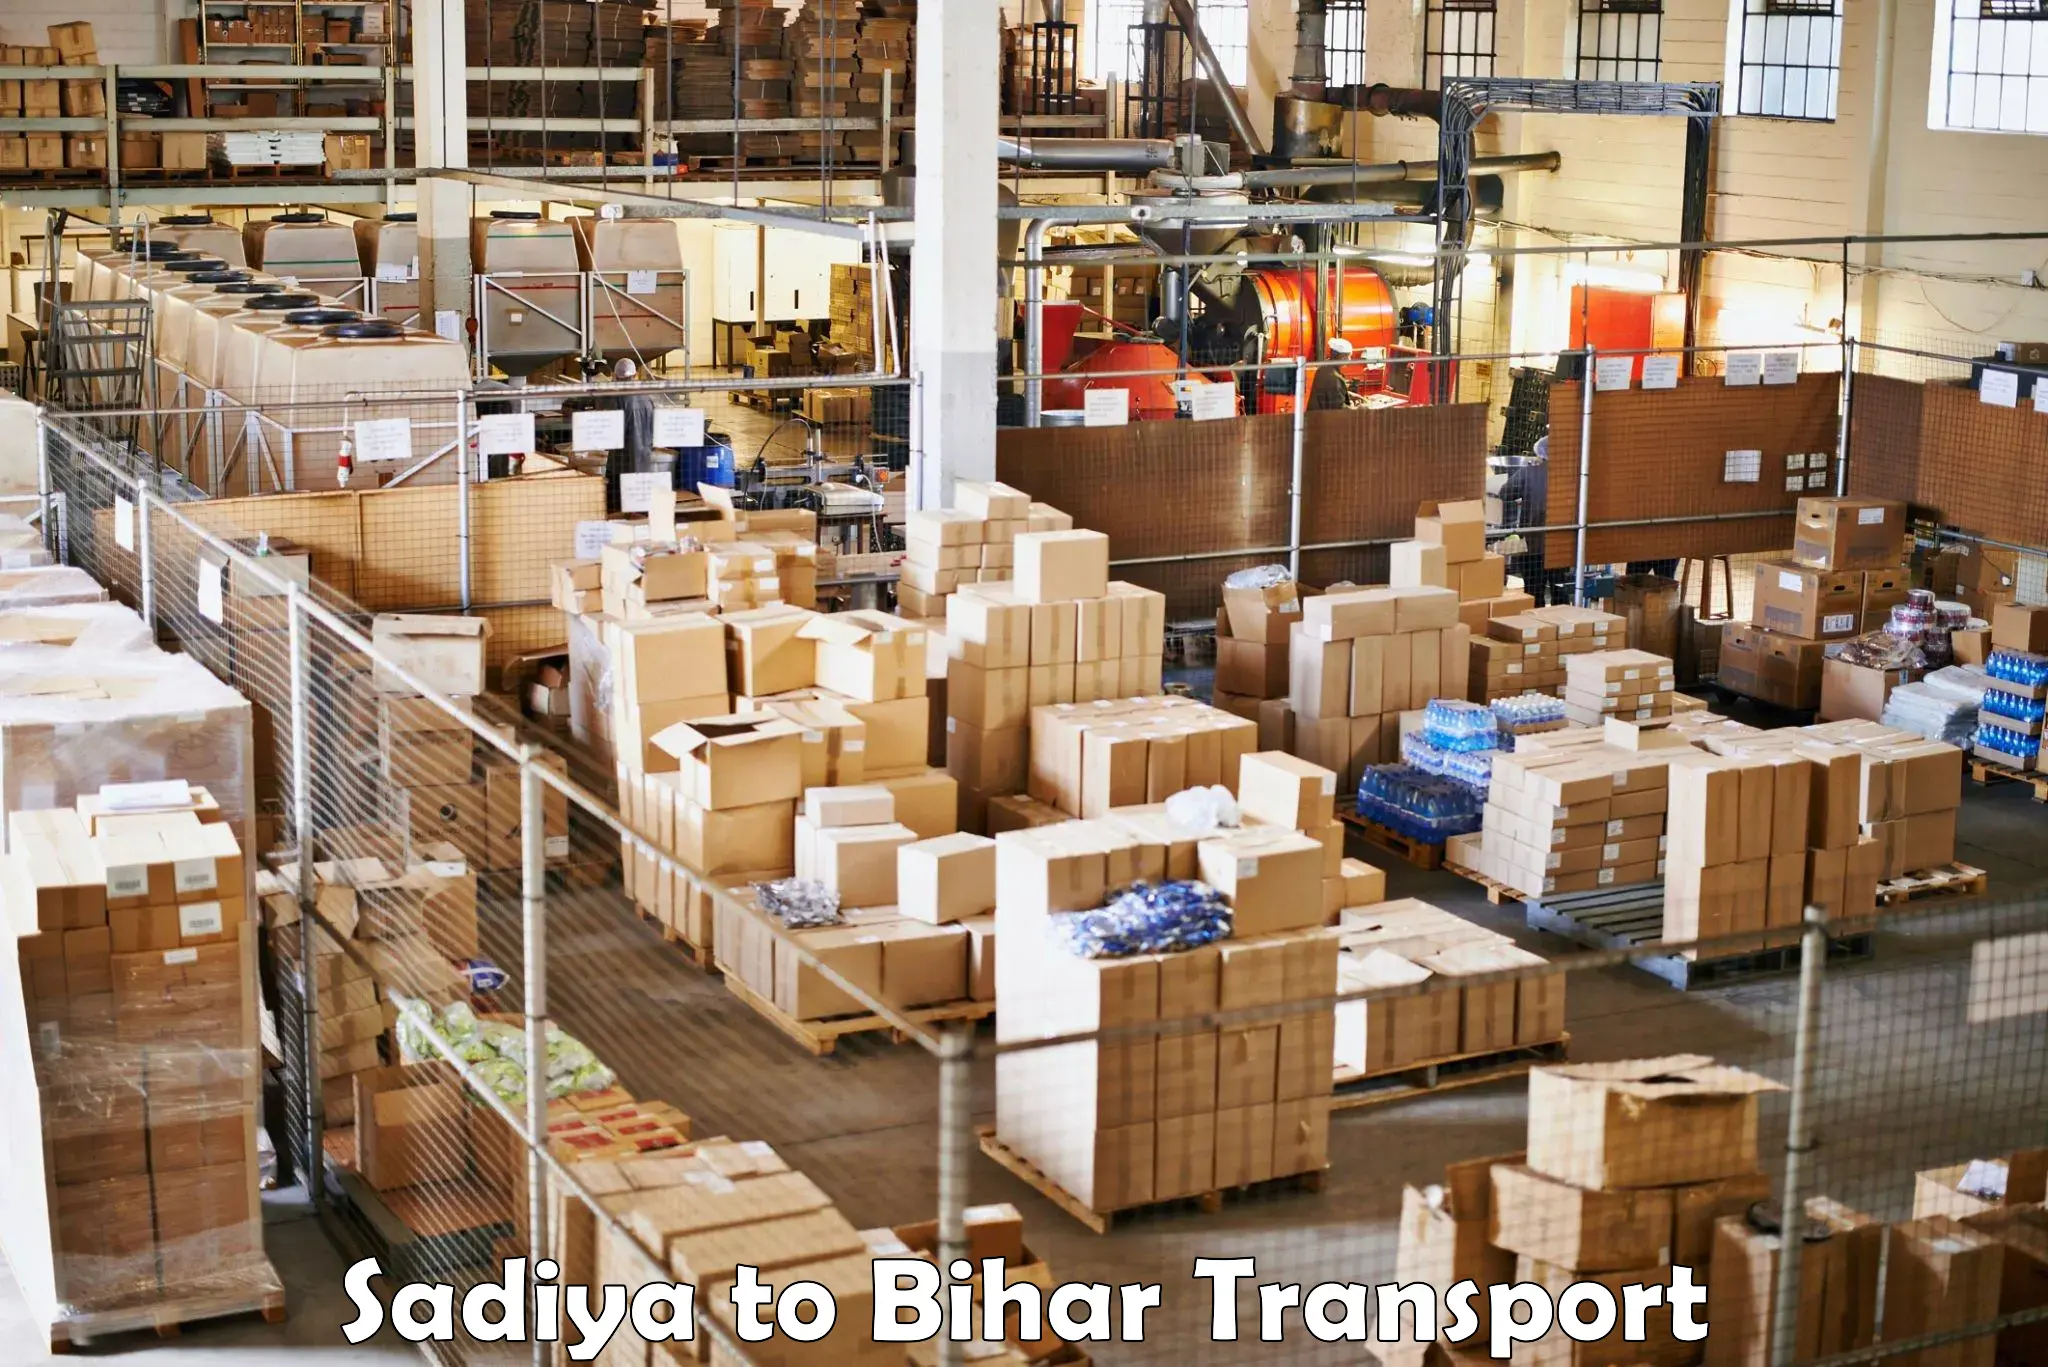 Truck transport companies in India Sadiya to Bankipore